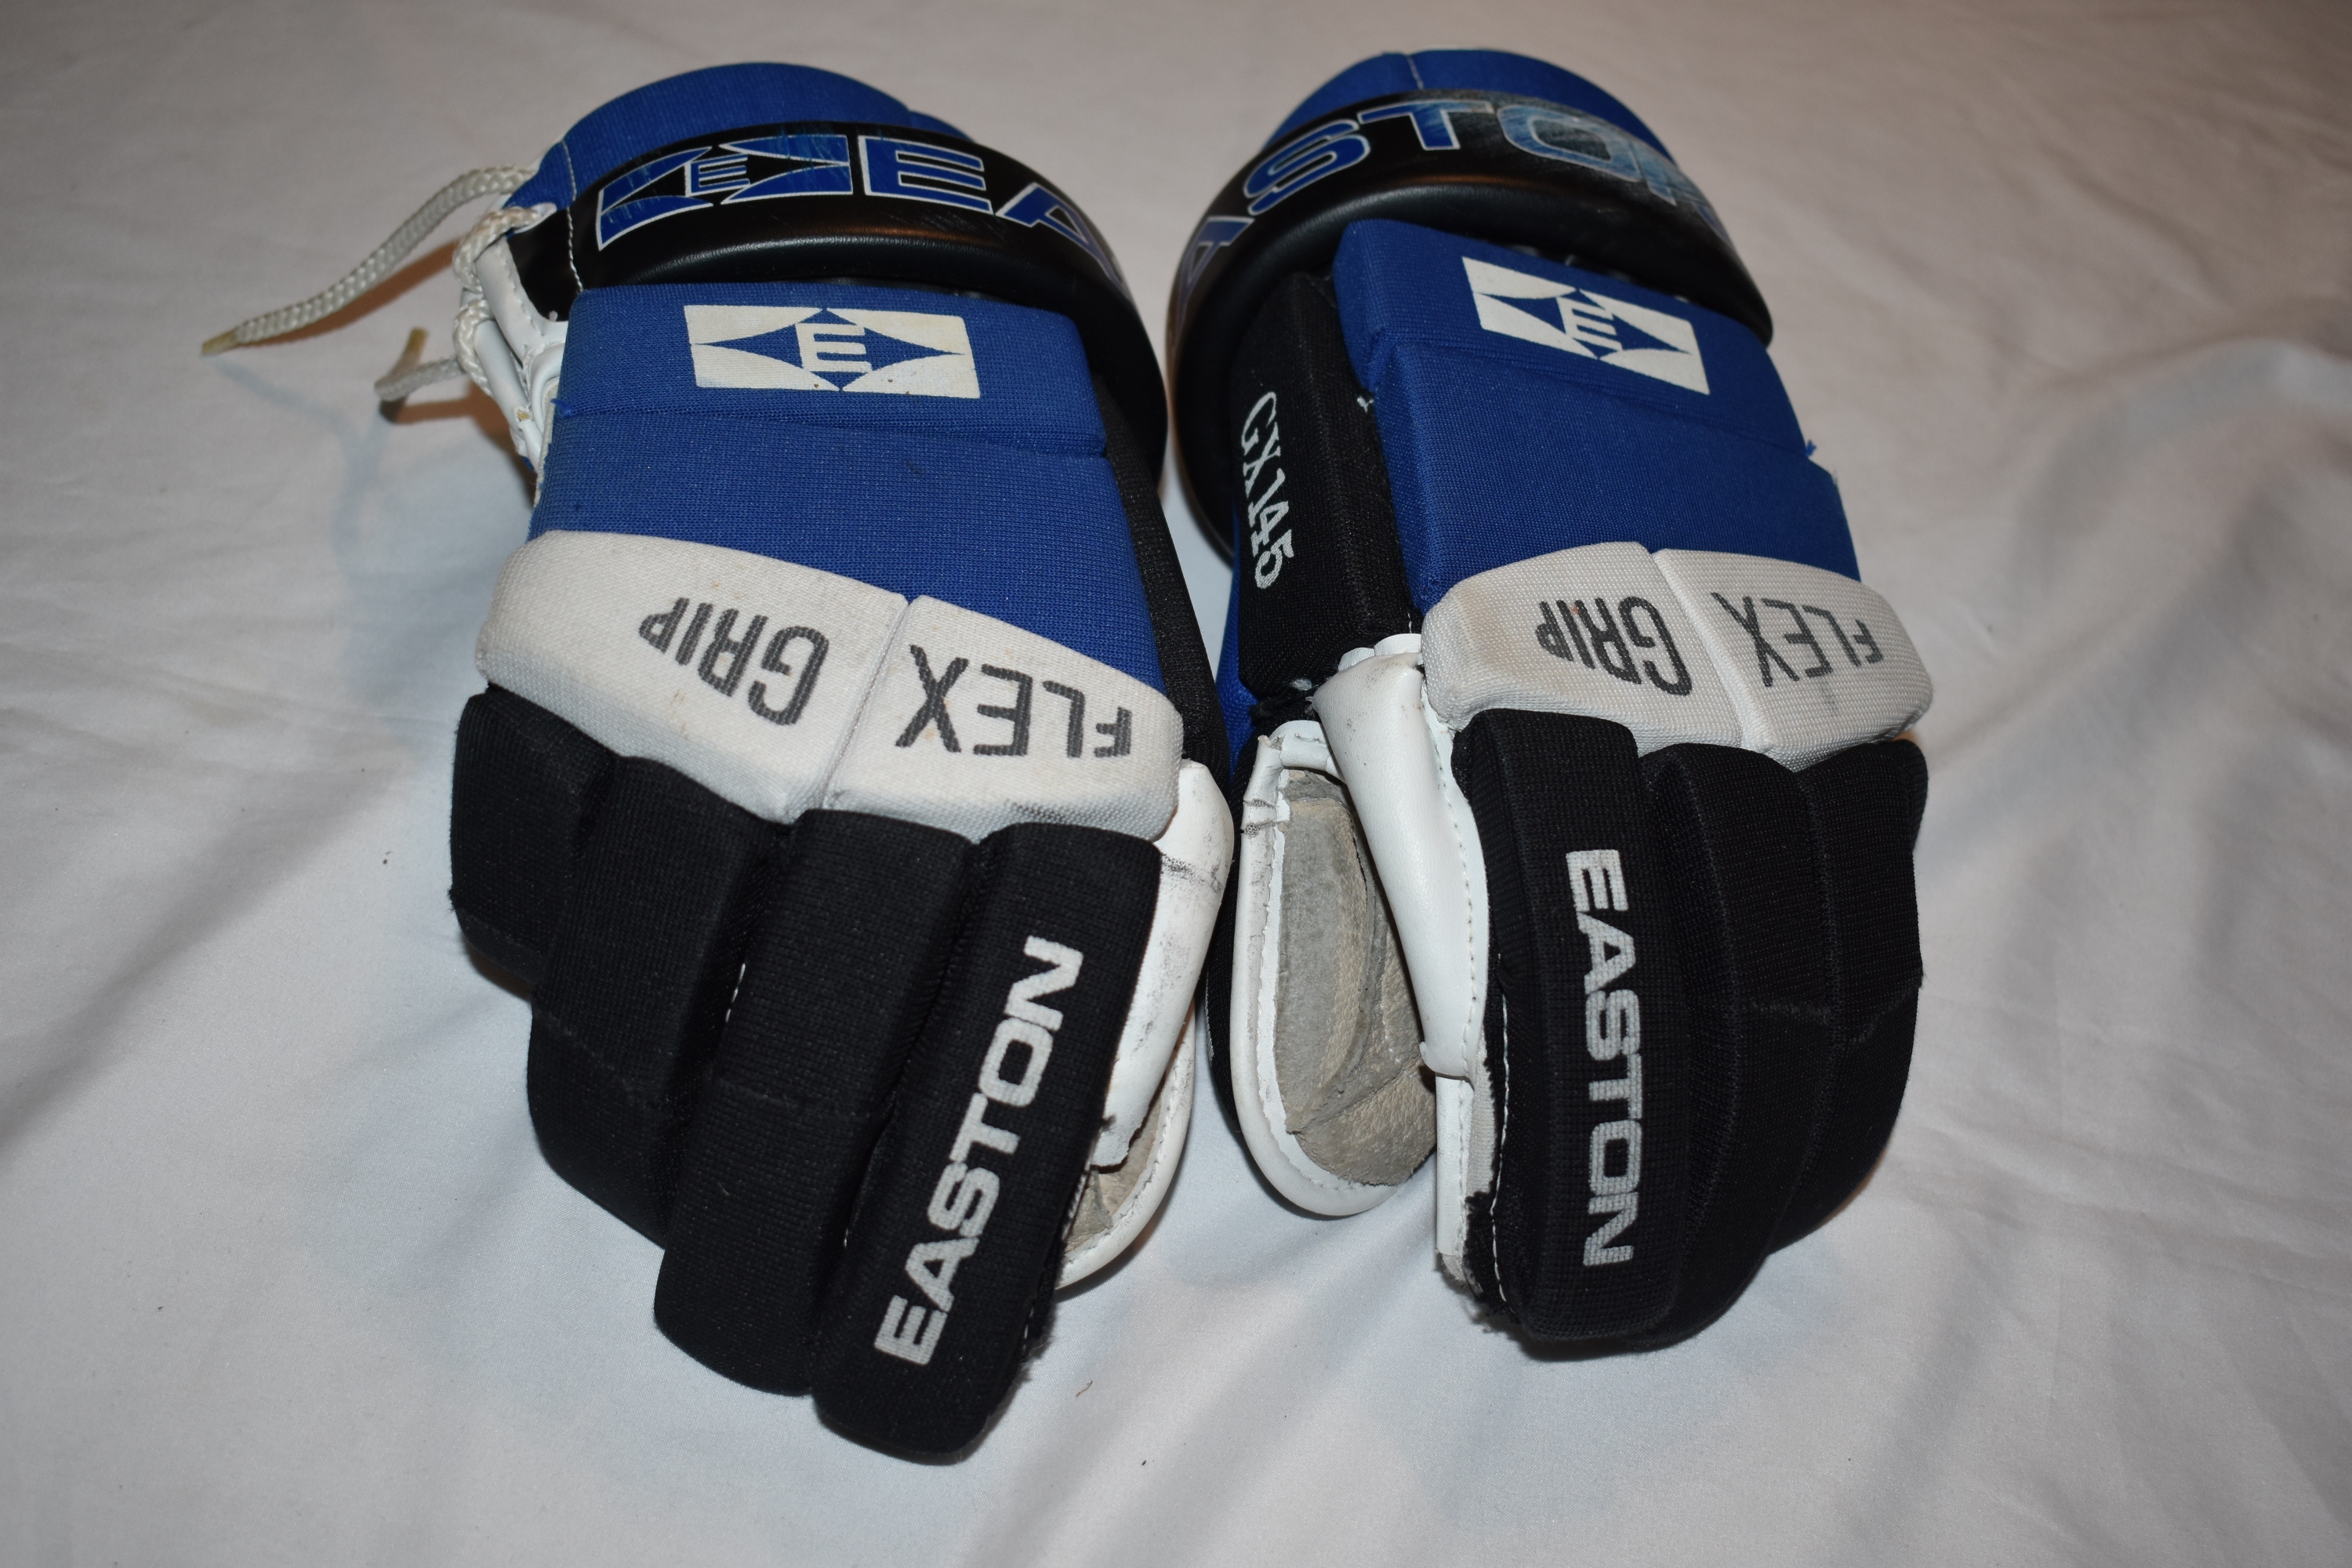 Easton GX145 Flex Grip Leather Palm Hockey Gloves, Black/White/Blue, 14.5 Inches